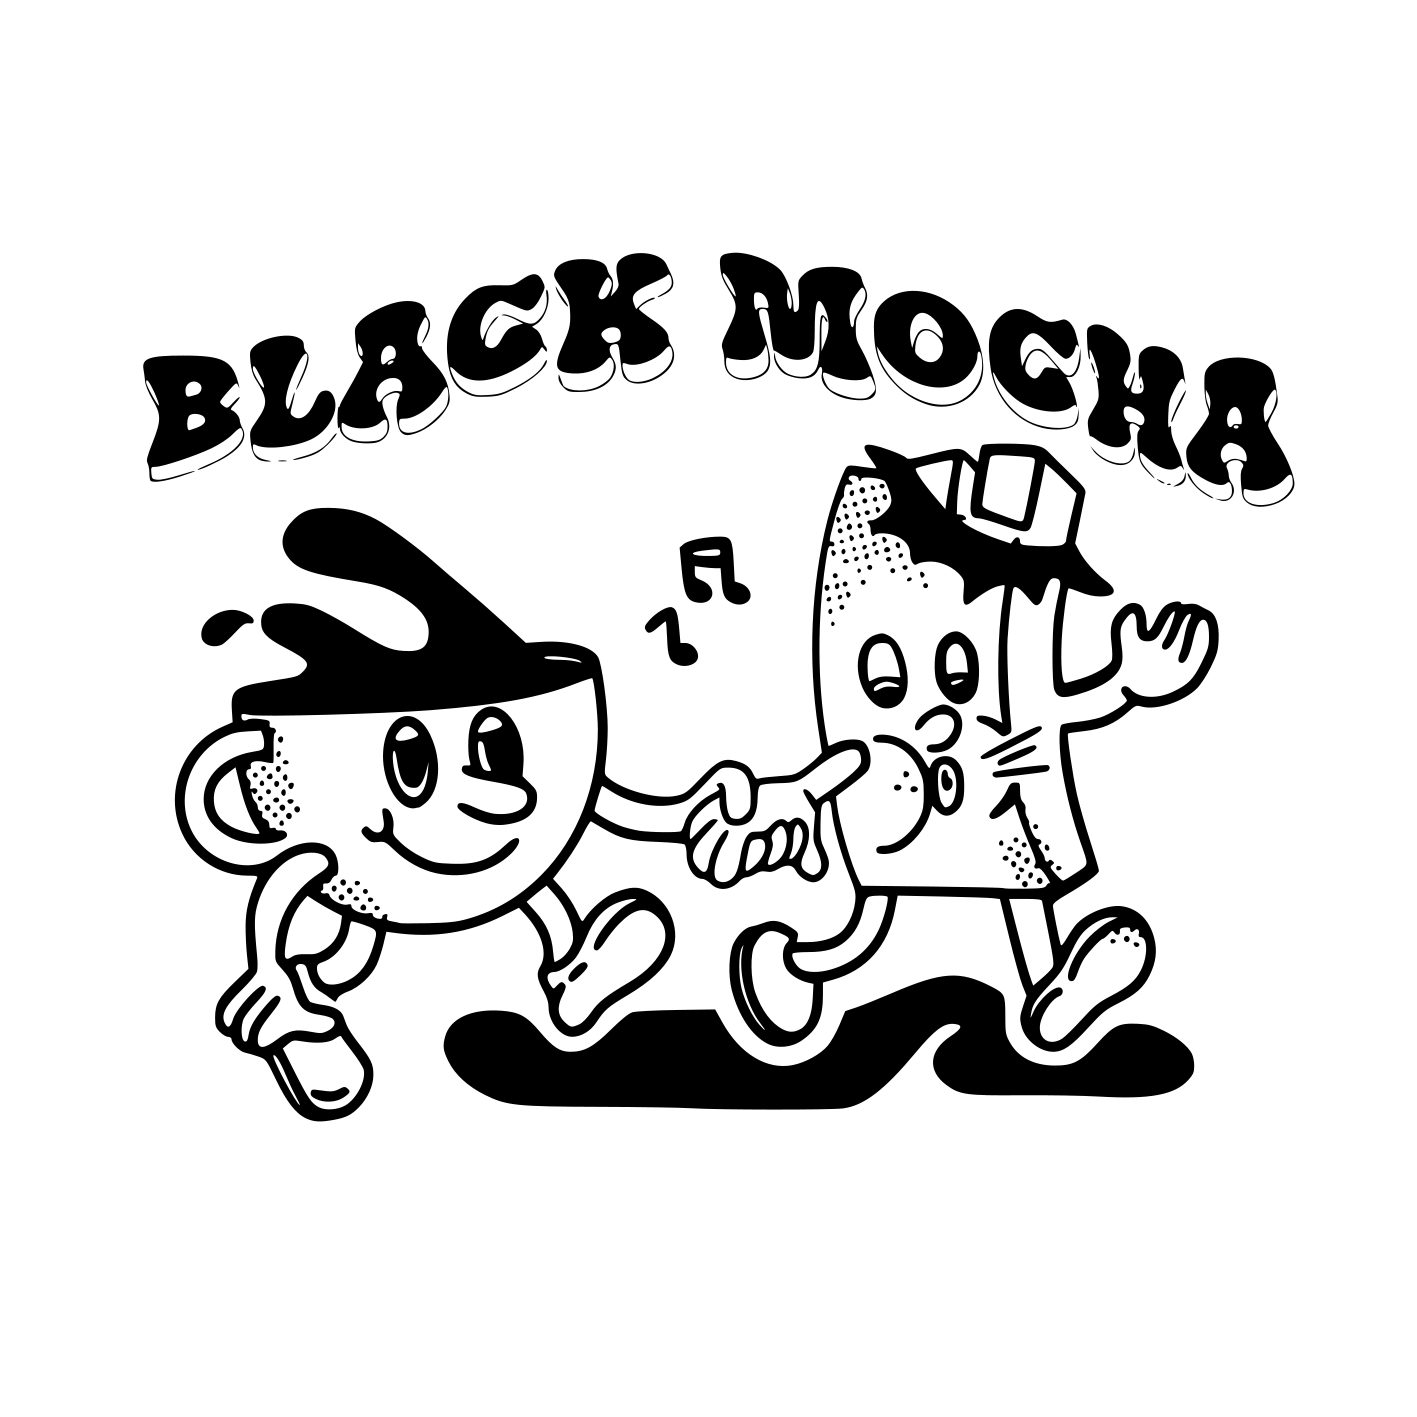 BLACK MOCHA BRIGHTON